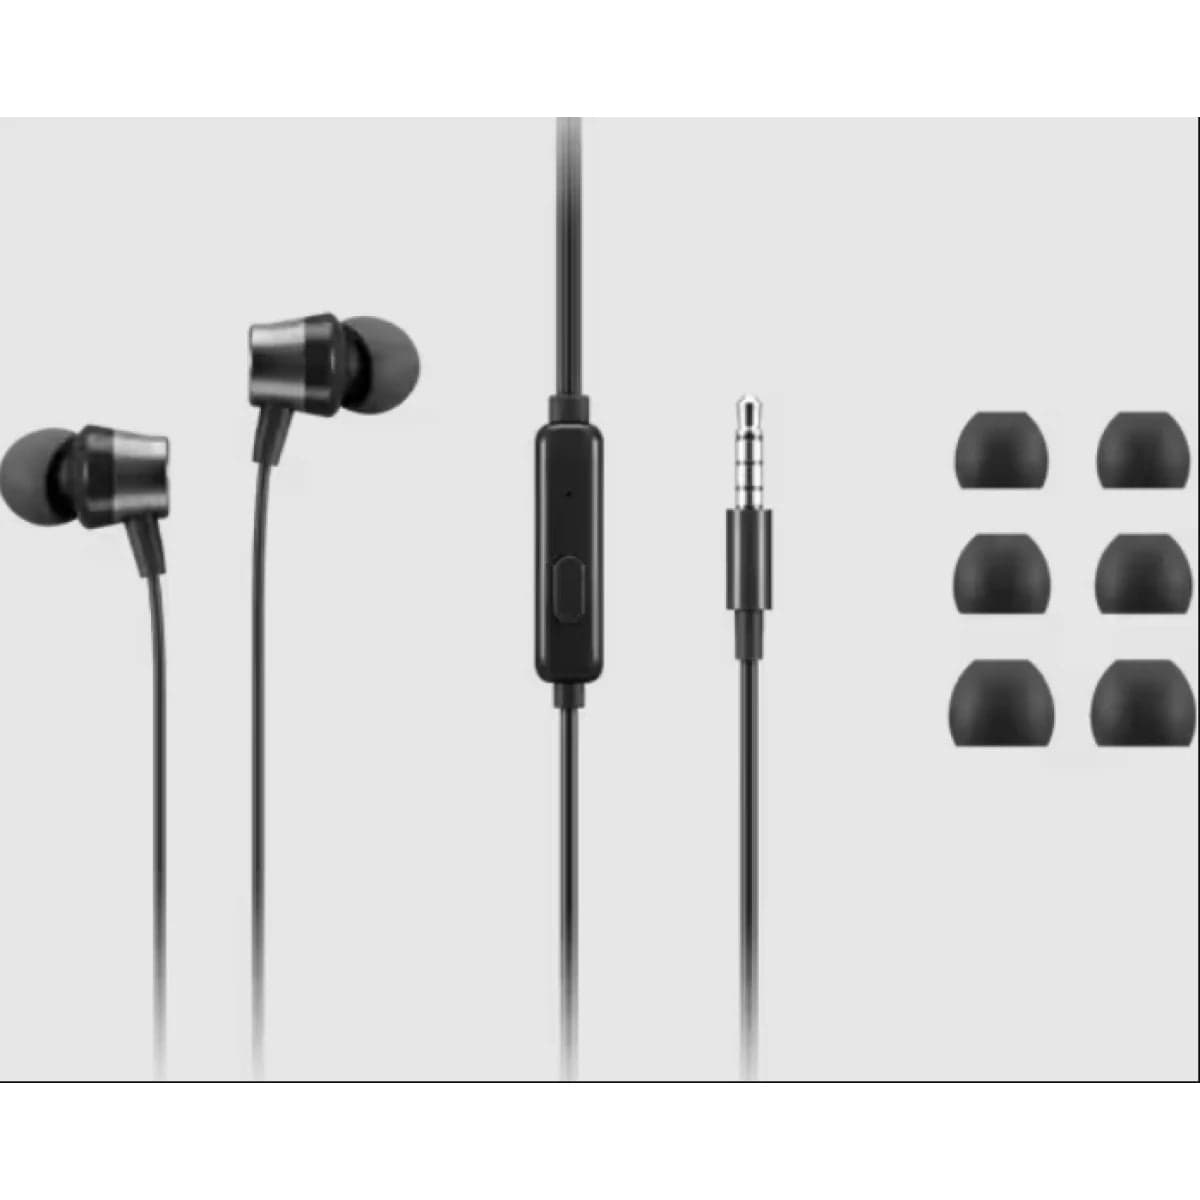 LENOVO headphone Lenovo Analog In-Ear Headphone Gen II Wired Stereo Mini-Phone (3.5mm) w/ Mic , Windows, Mac, Android - Black 4XD1J77352